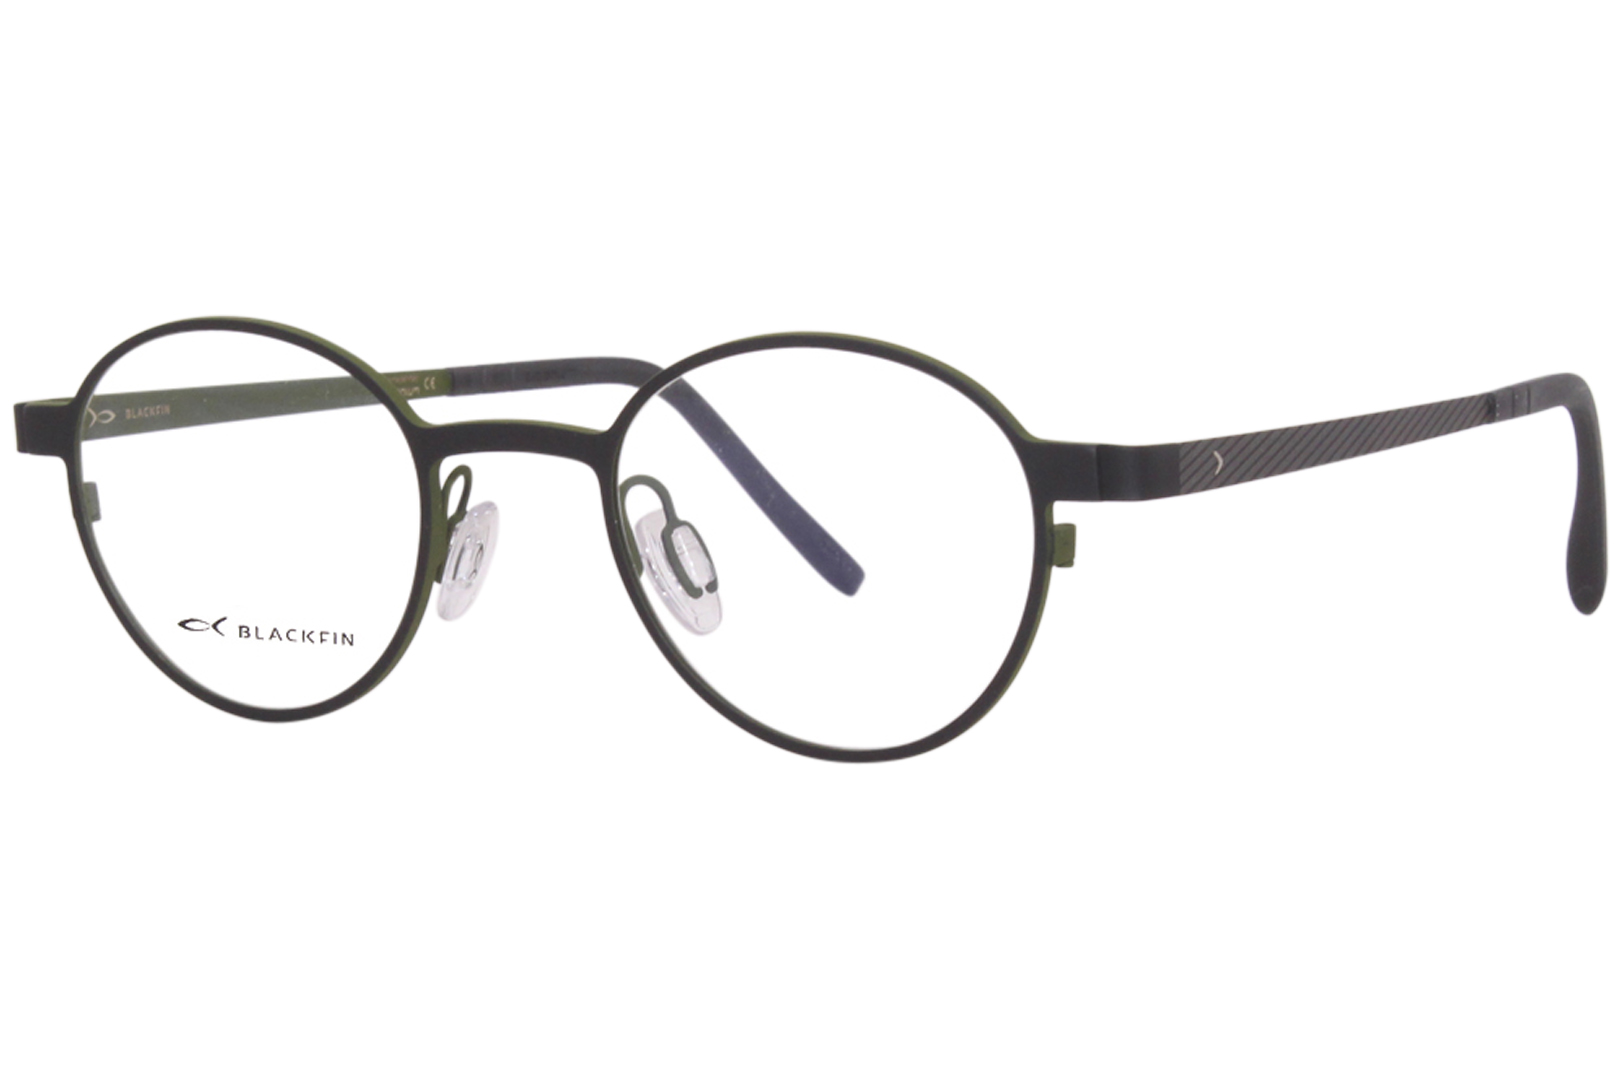 Blackfin Esbjerg BF811 Eyeglasses Full Rim Round Shape | EyeSpecs.com